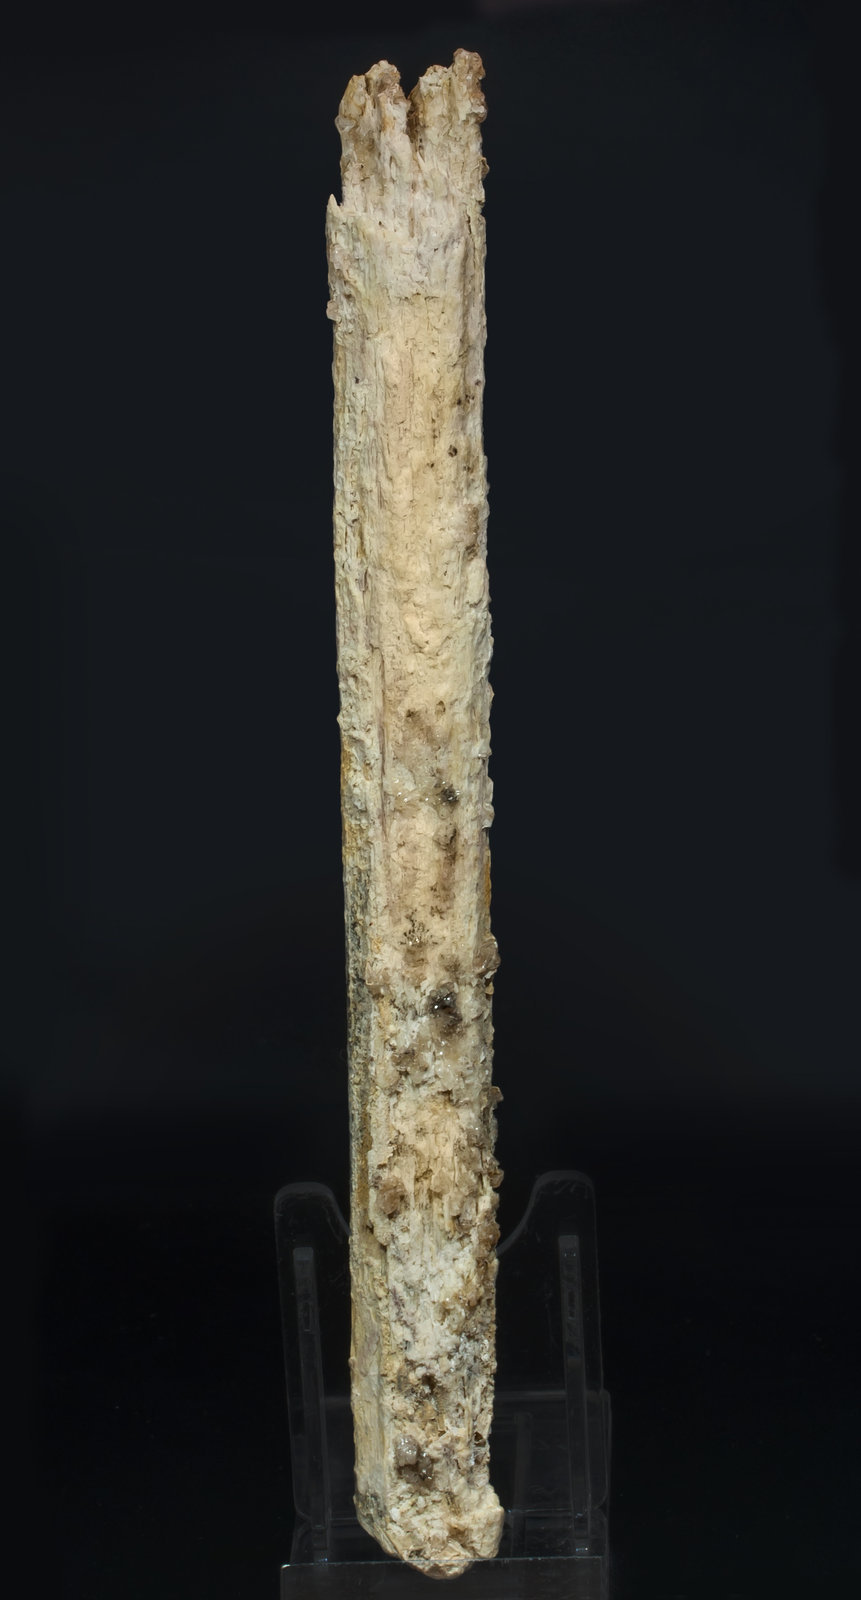 specimens/s_imagesAH7/Stibiconite-MD87AH7r.jpg